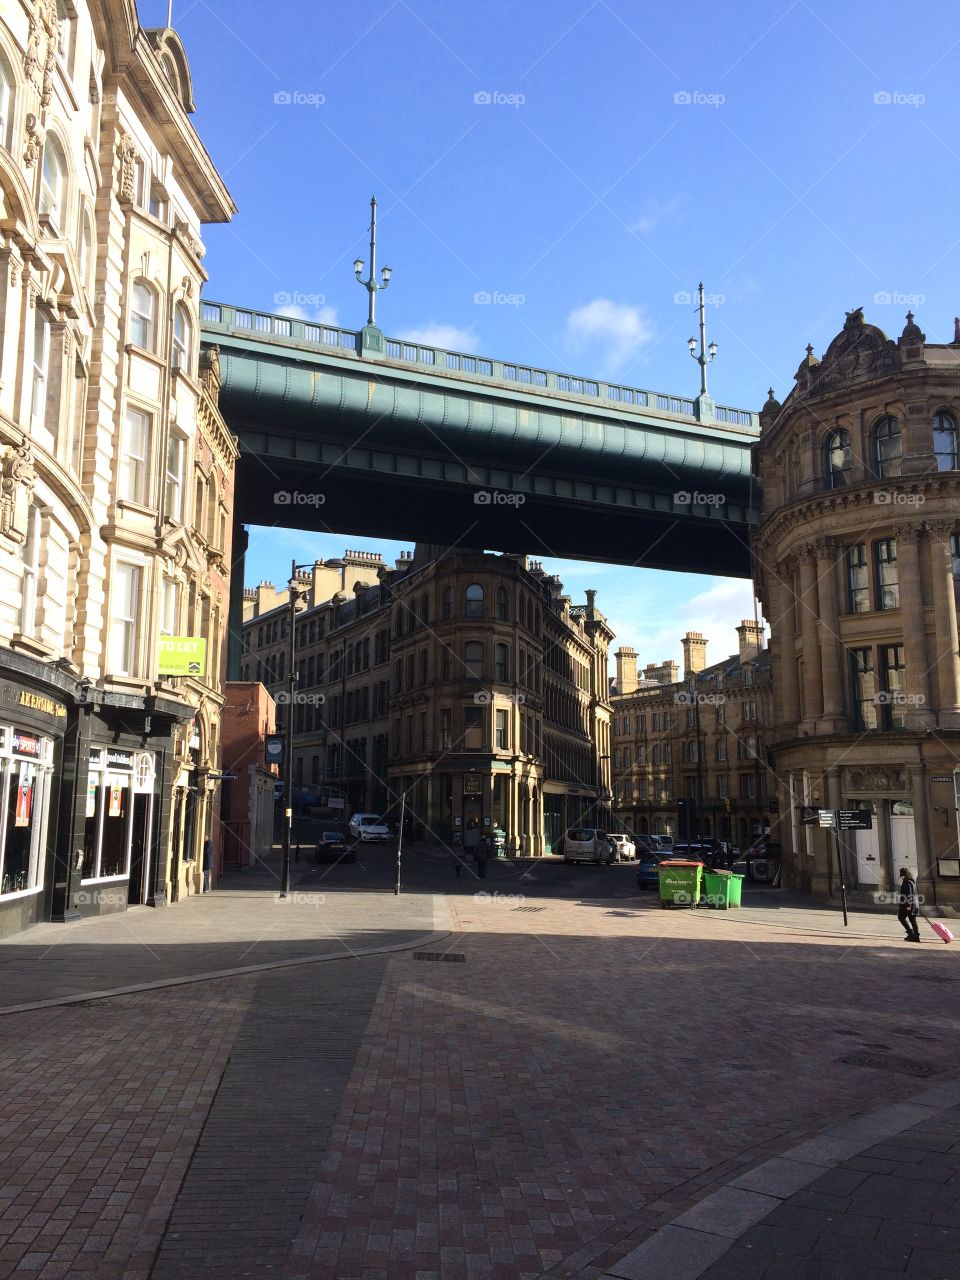 Newcastle bridge 